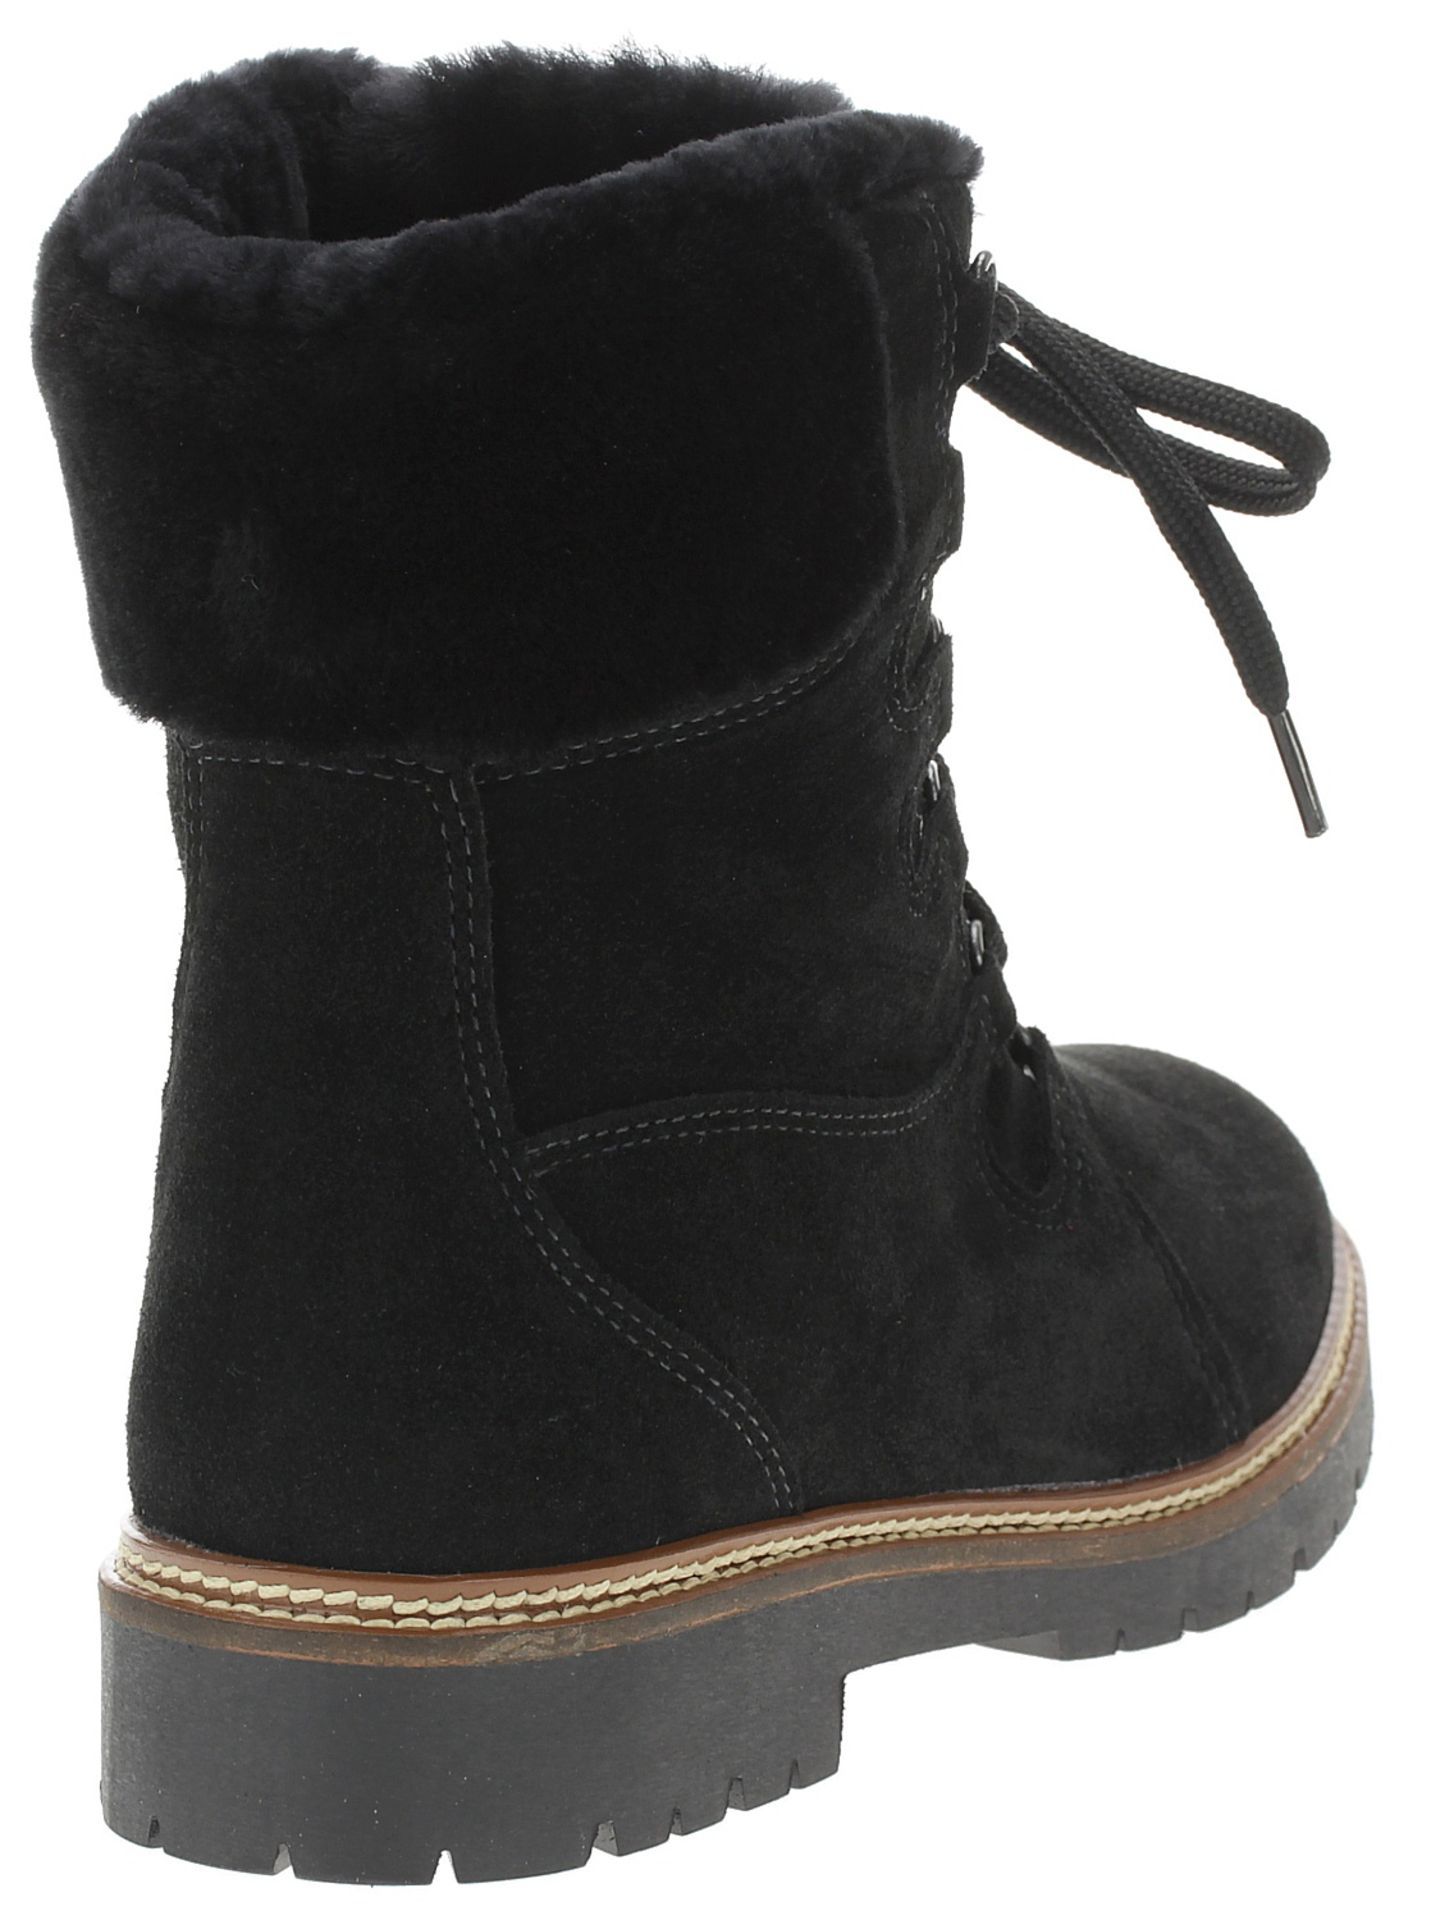 1 x Pair of Designer Olang Meribel 81 Nero Women's Winter Boots - Euro Size 38 - Brand New Boxed - Image 3 of 5